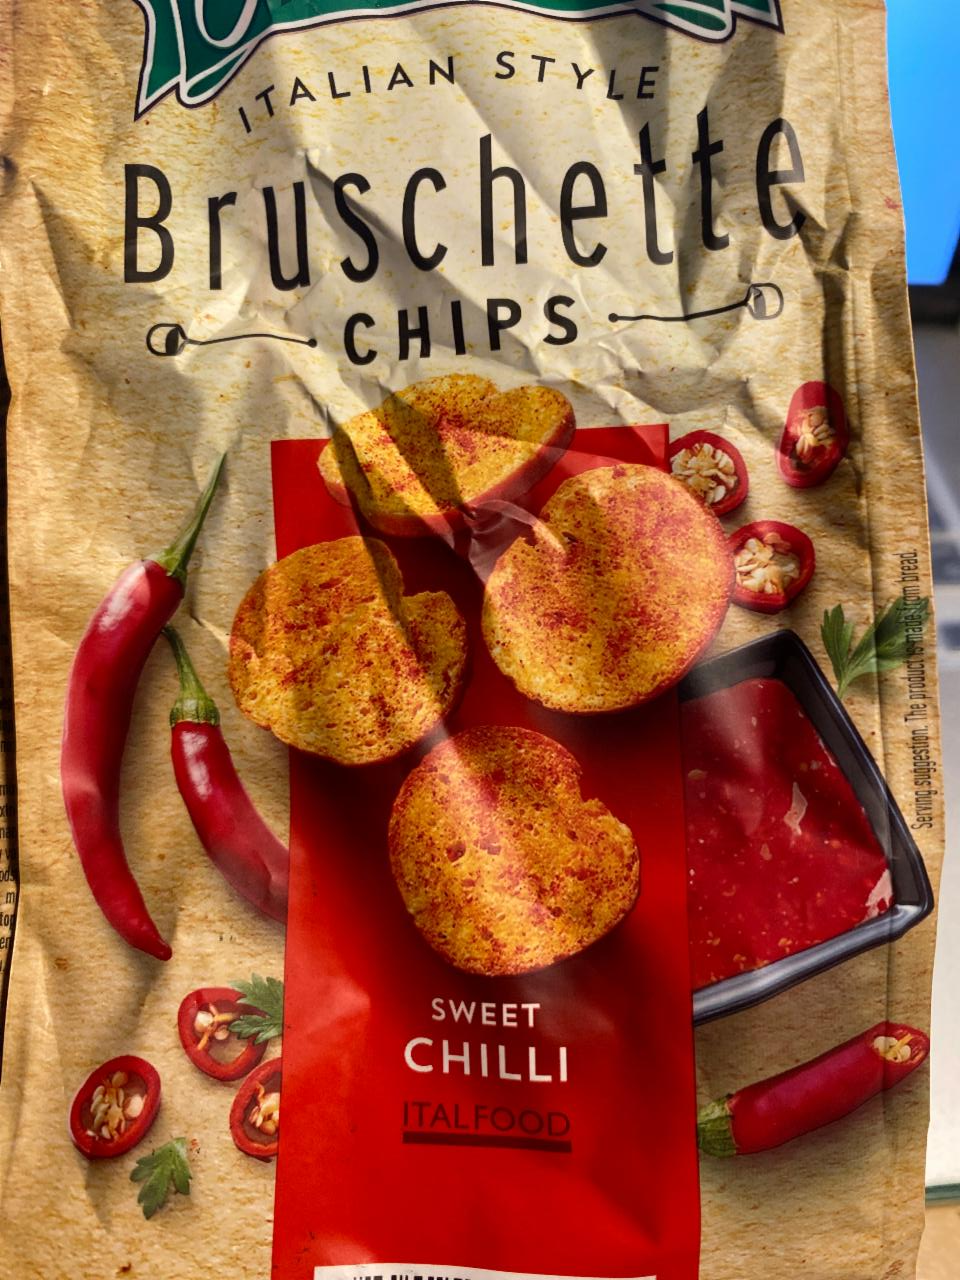 Фото - Chips sweet chilli сухари из багета со сладким чили и луком Bruschette Maretti